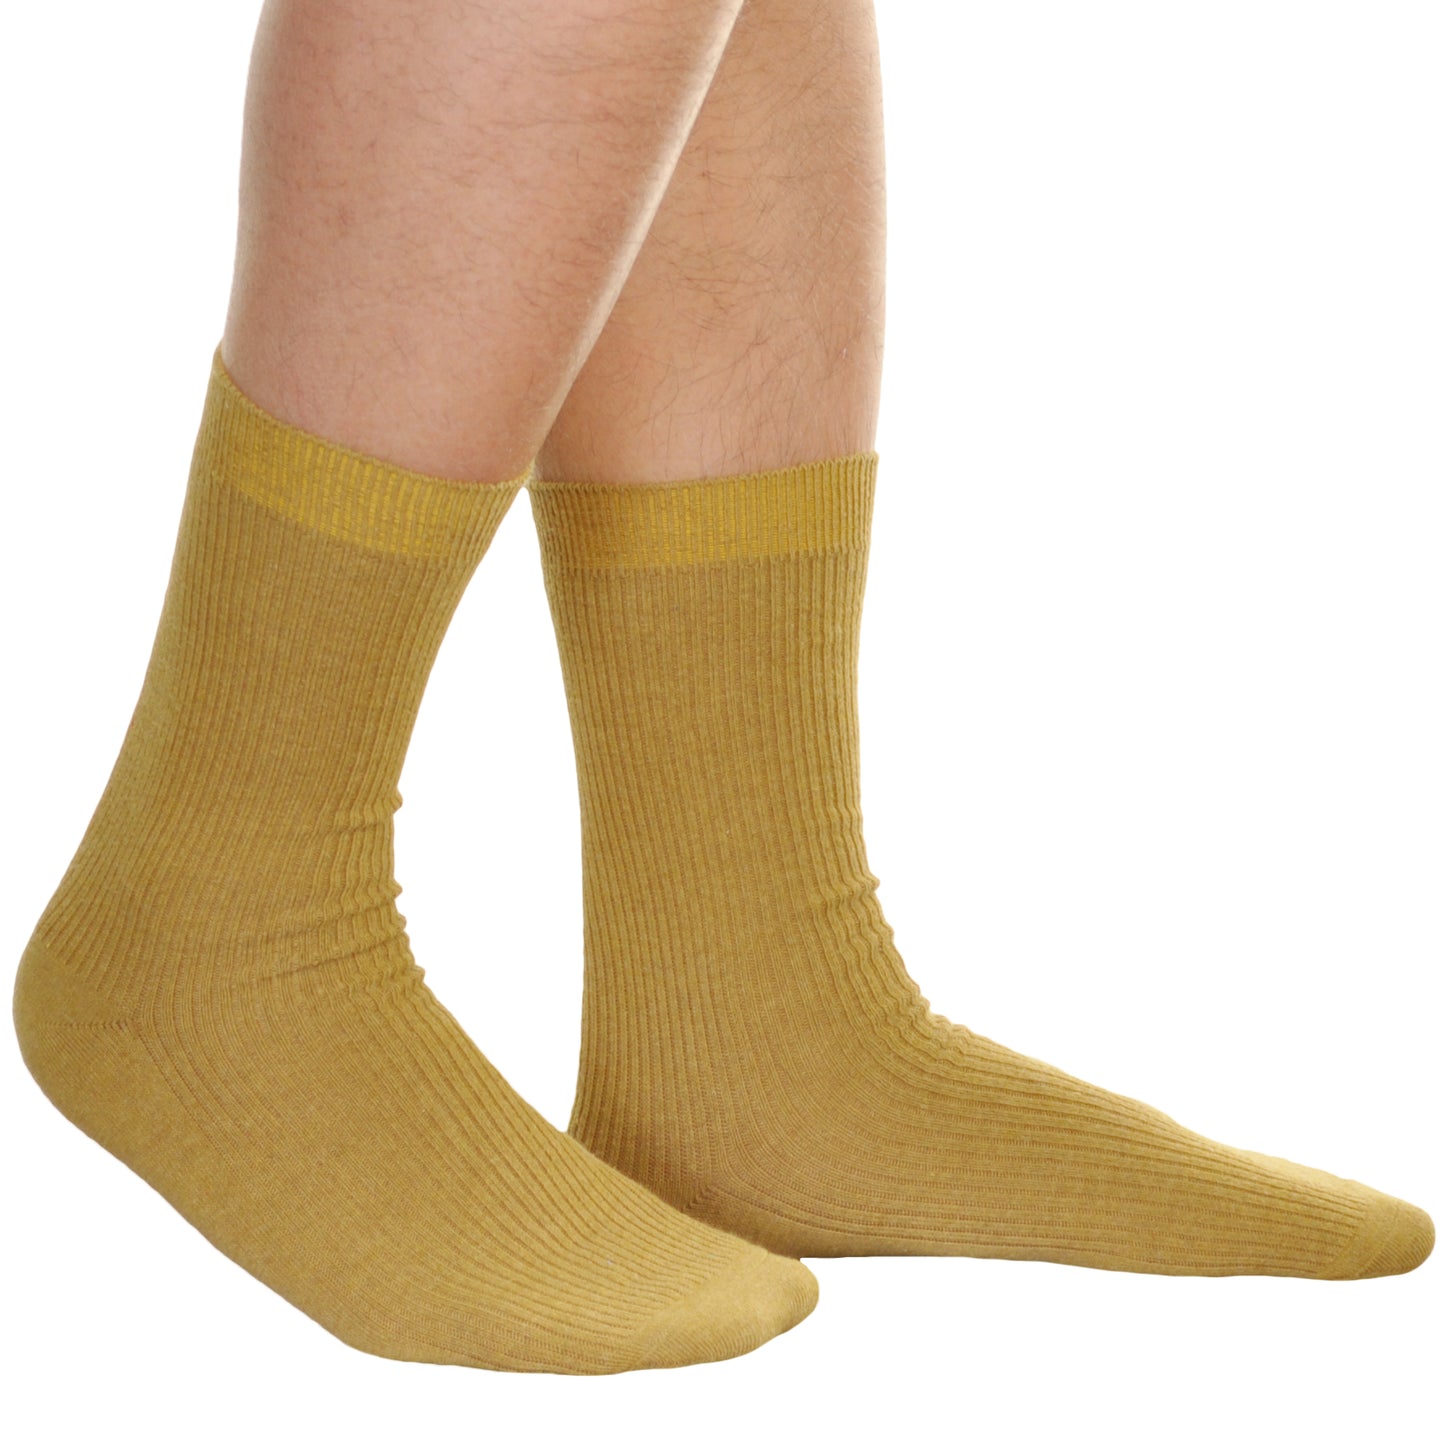 Men's Cotton Ribbed Knit Crew Socks (6-Pairs)